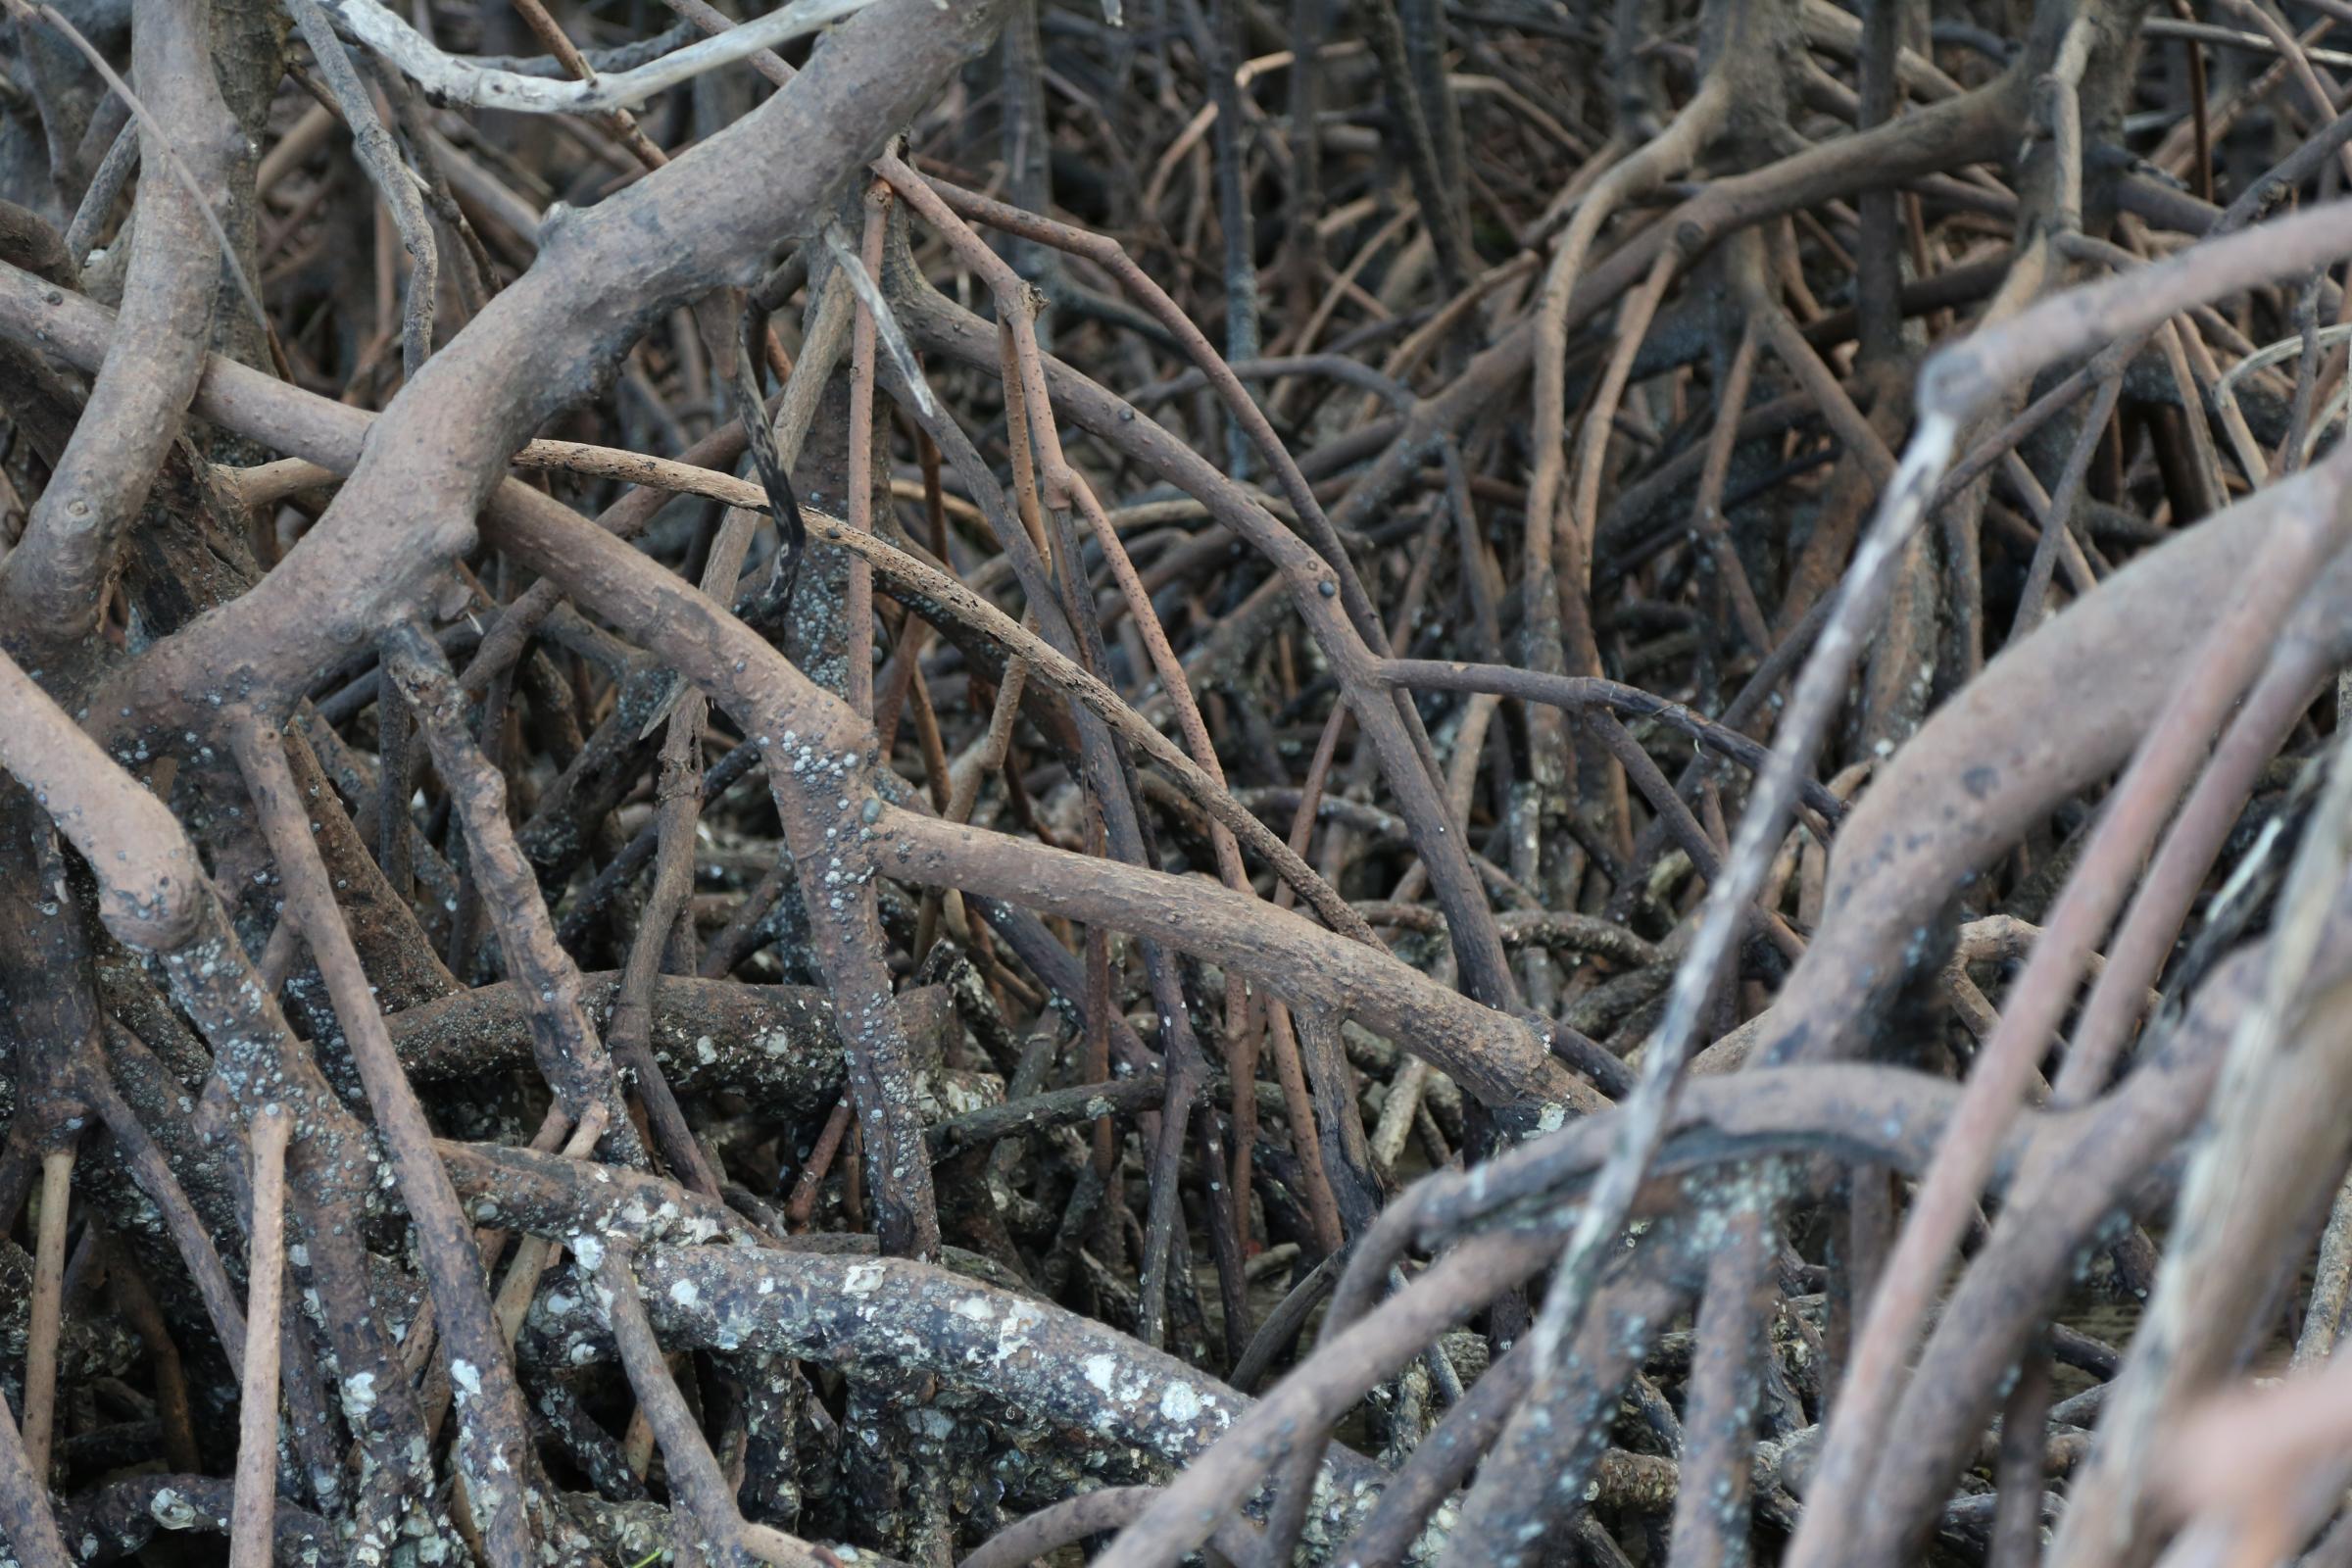 Mangroves roots, Yirrganydji Country, Port Douglas, Qld. (Photograph: Andrew Turner)